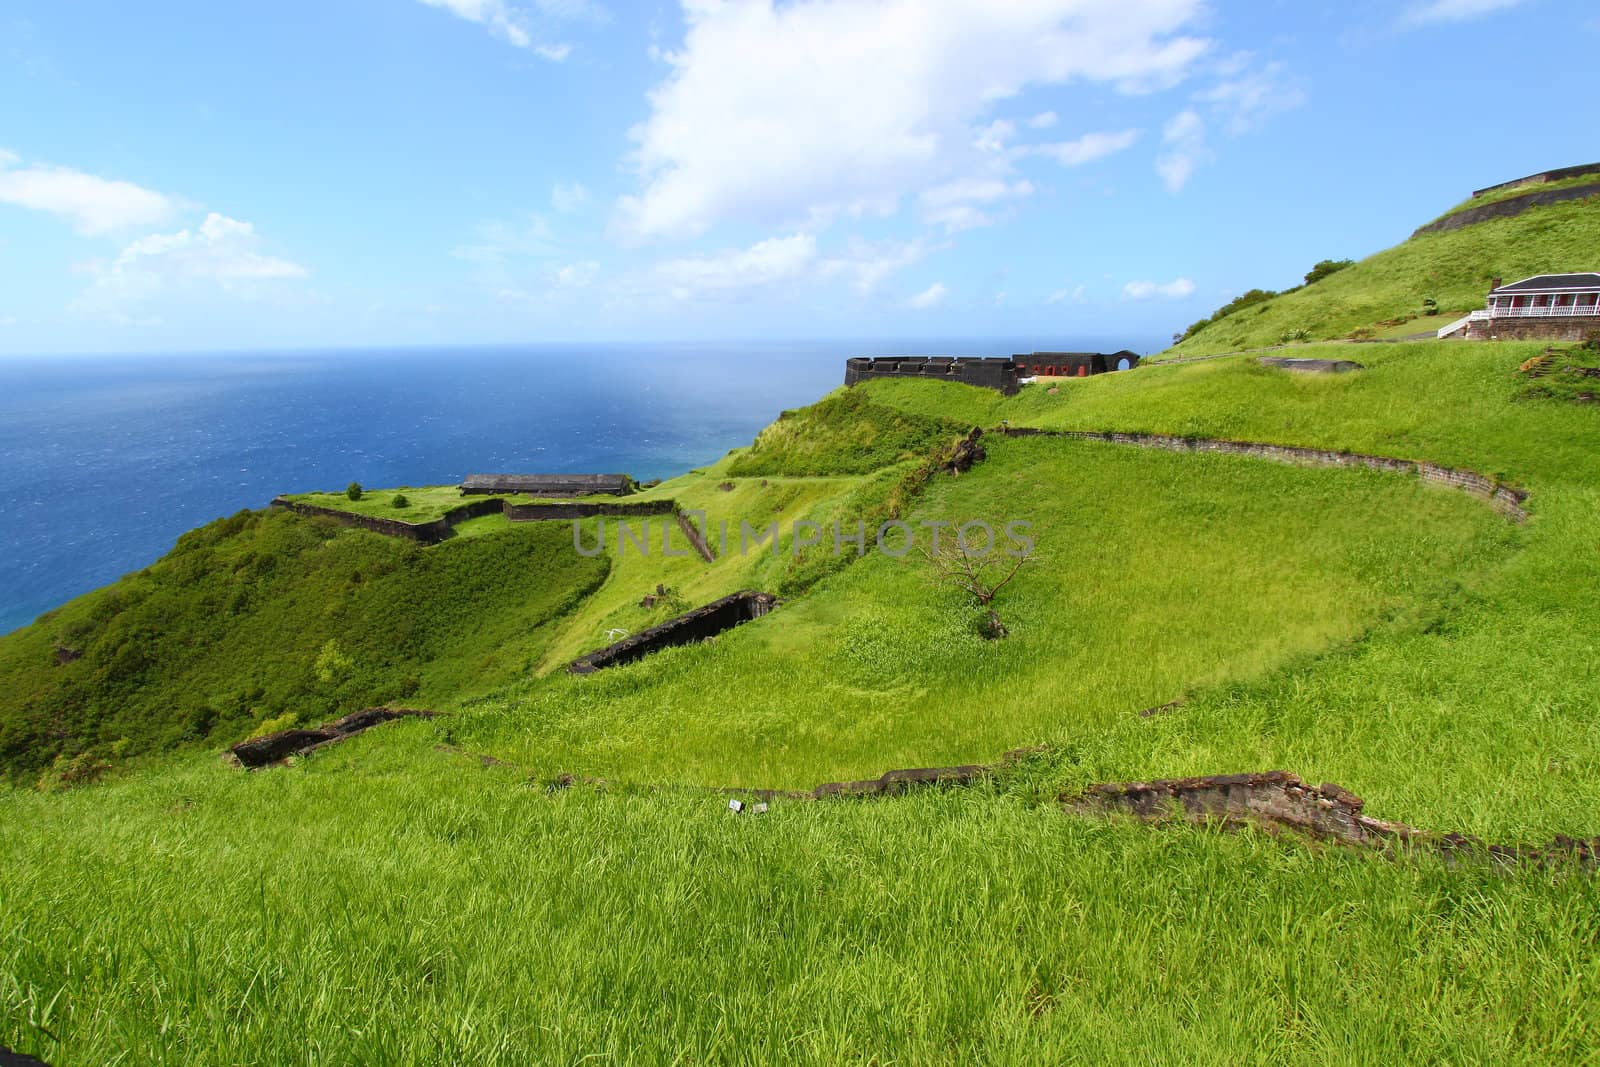 The coastline at Brimstone Hill Fortress on the Caribbean island of Saint Kitts.